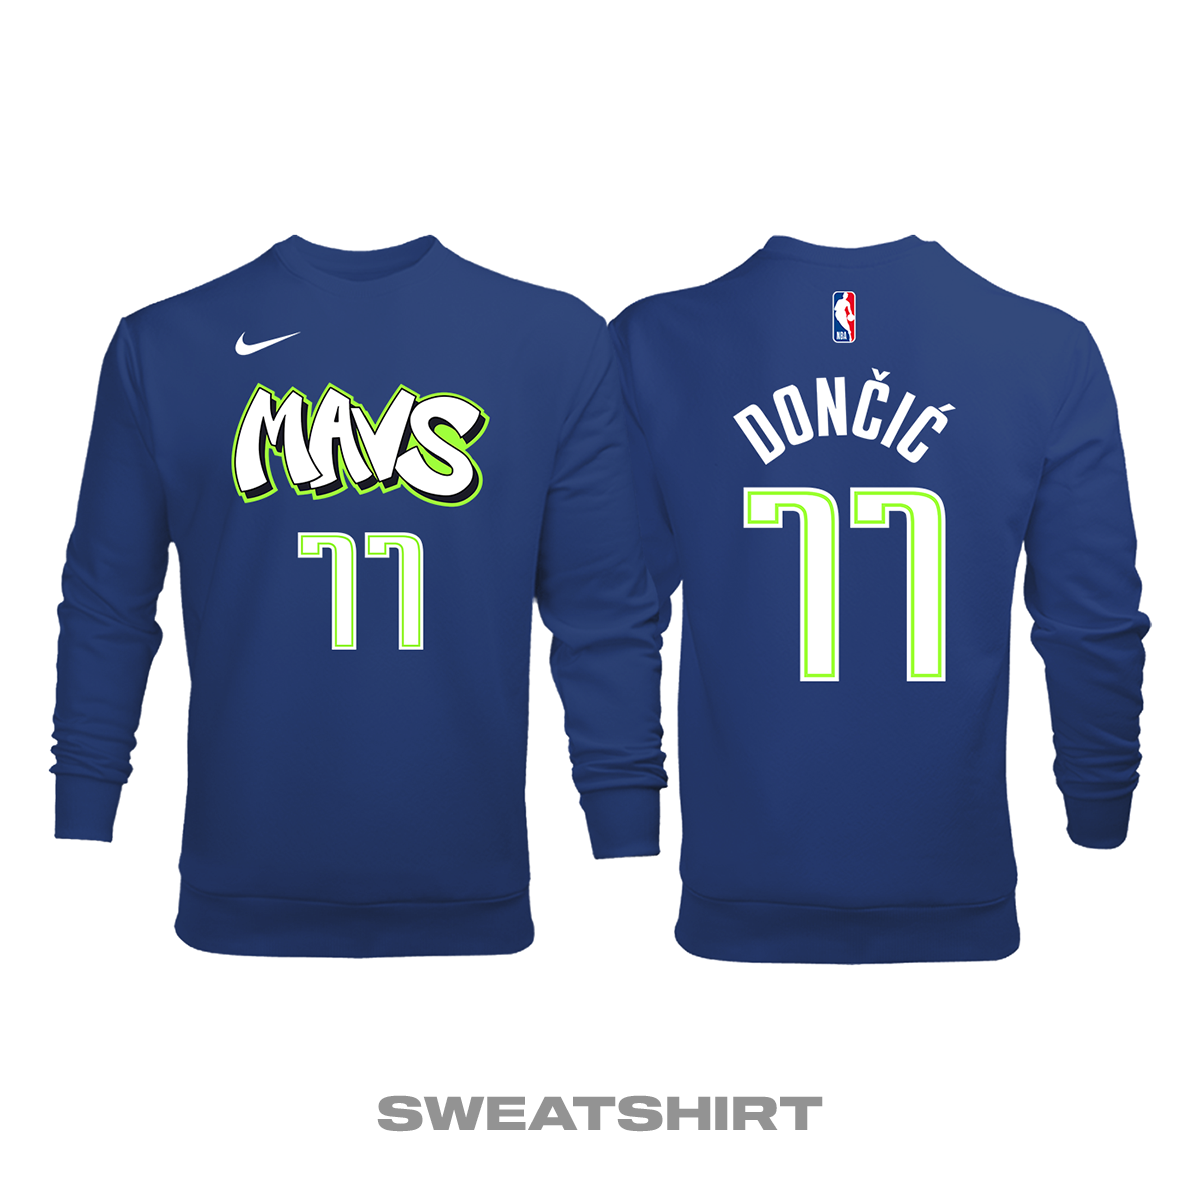 Dallas Mavericks: City Edition 2019/2020 Sweatshirt